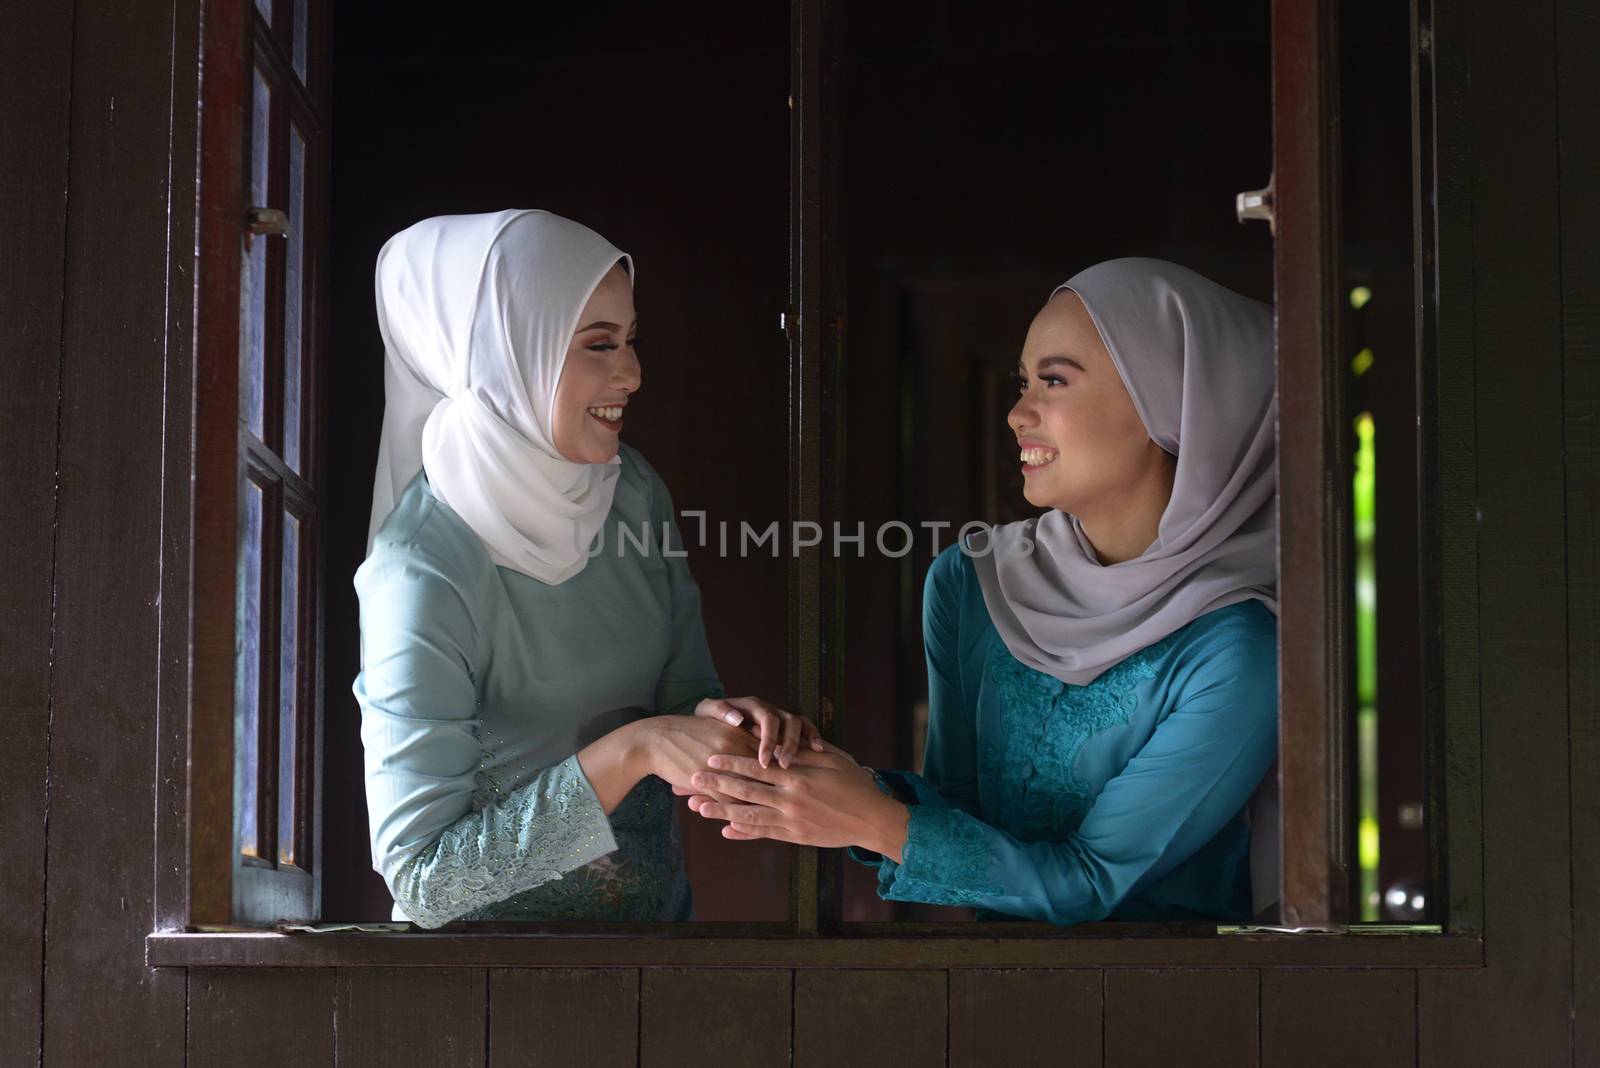 Asian Malay Muslim girls greetings during Hari Raya Aidilfitri. Malaysian people living lifestyle.